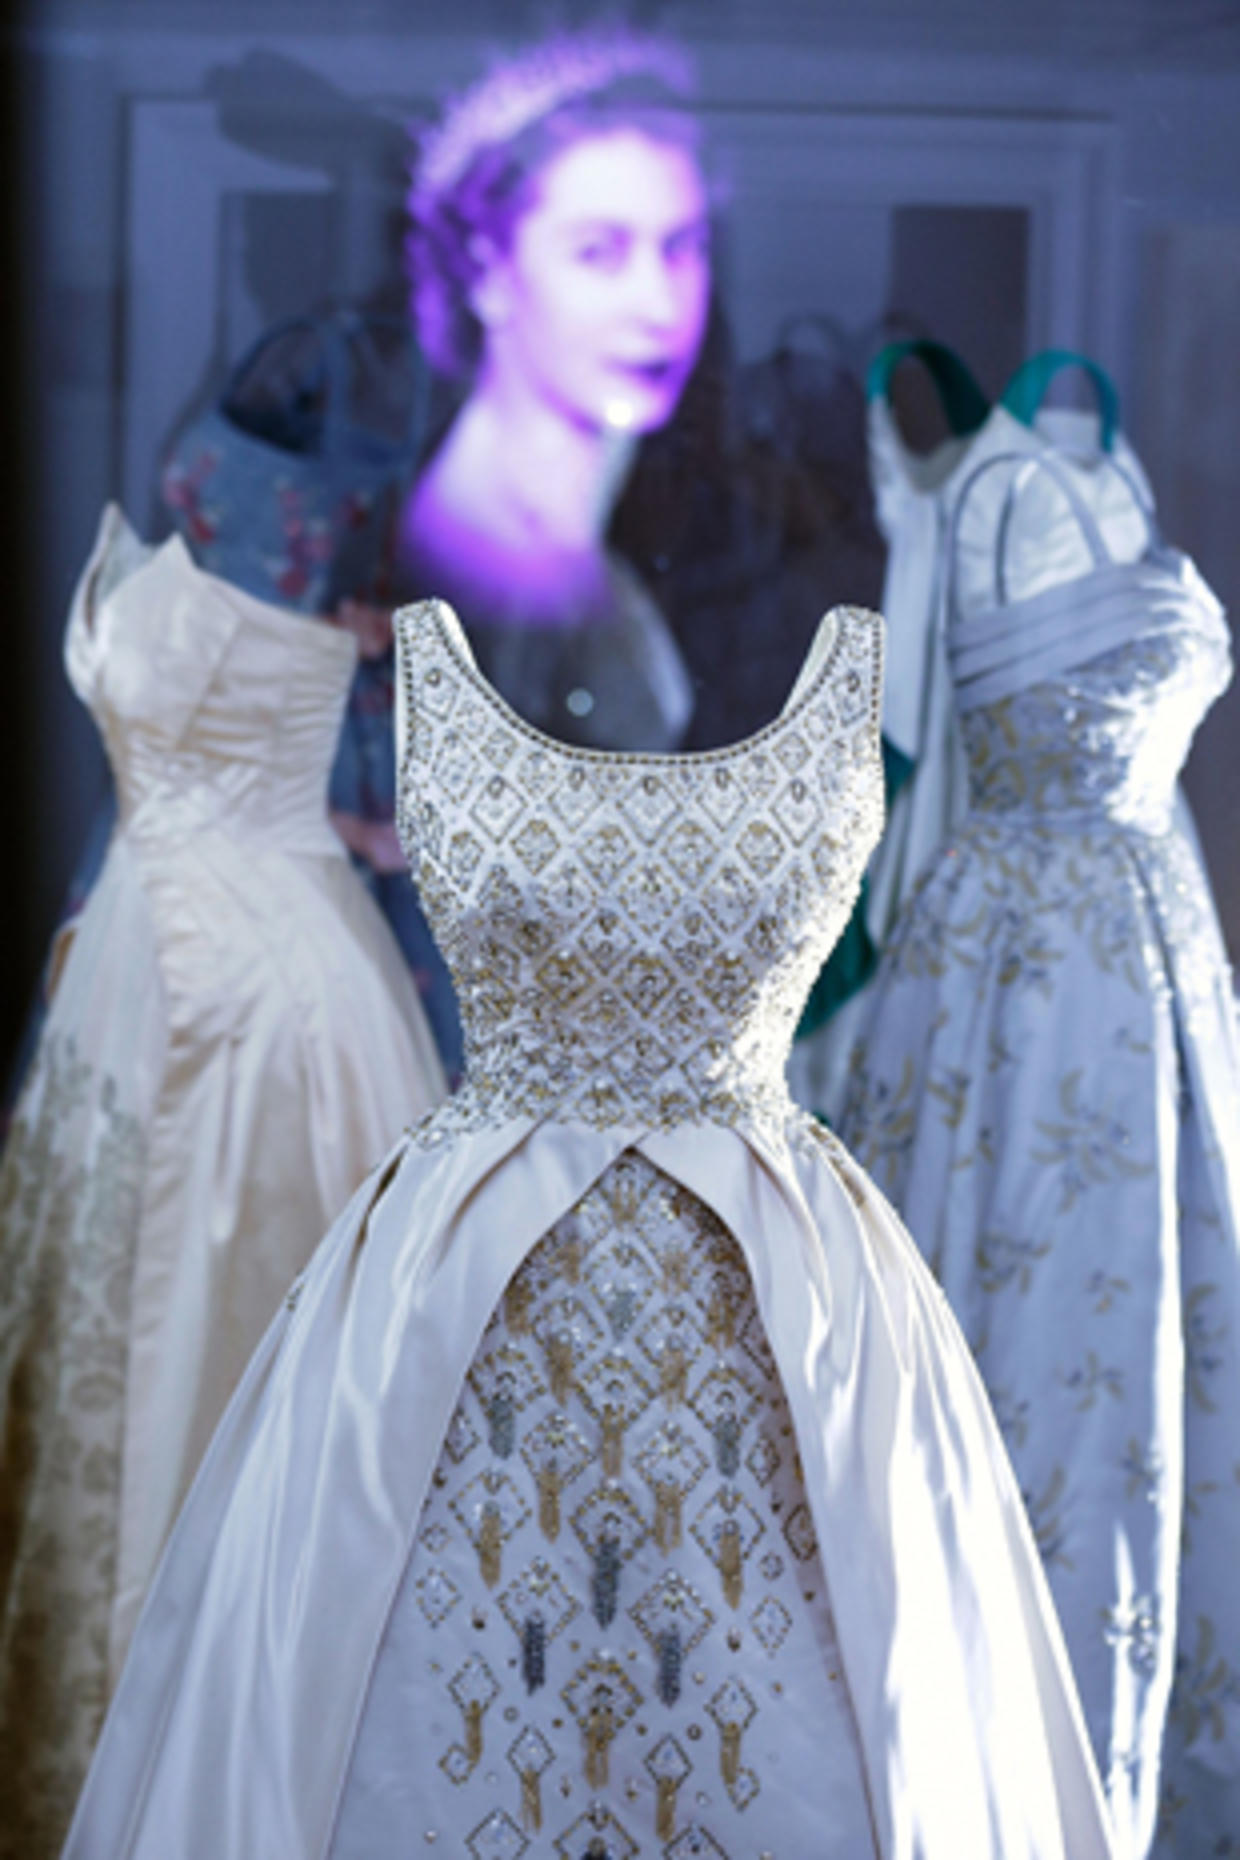 Royal gowns on display at Kensington Palace - CBS News